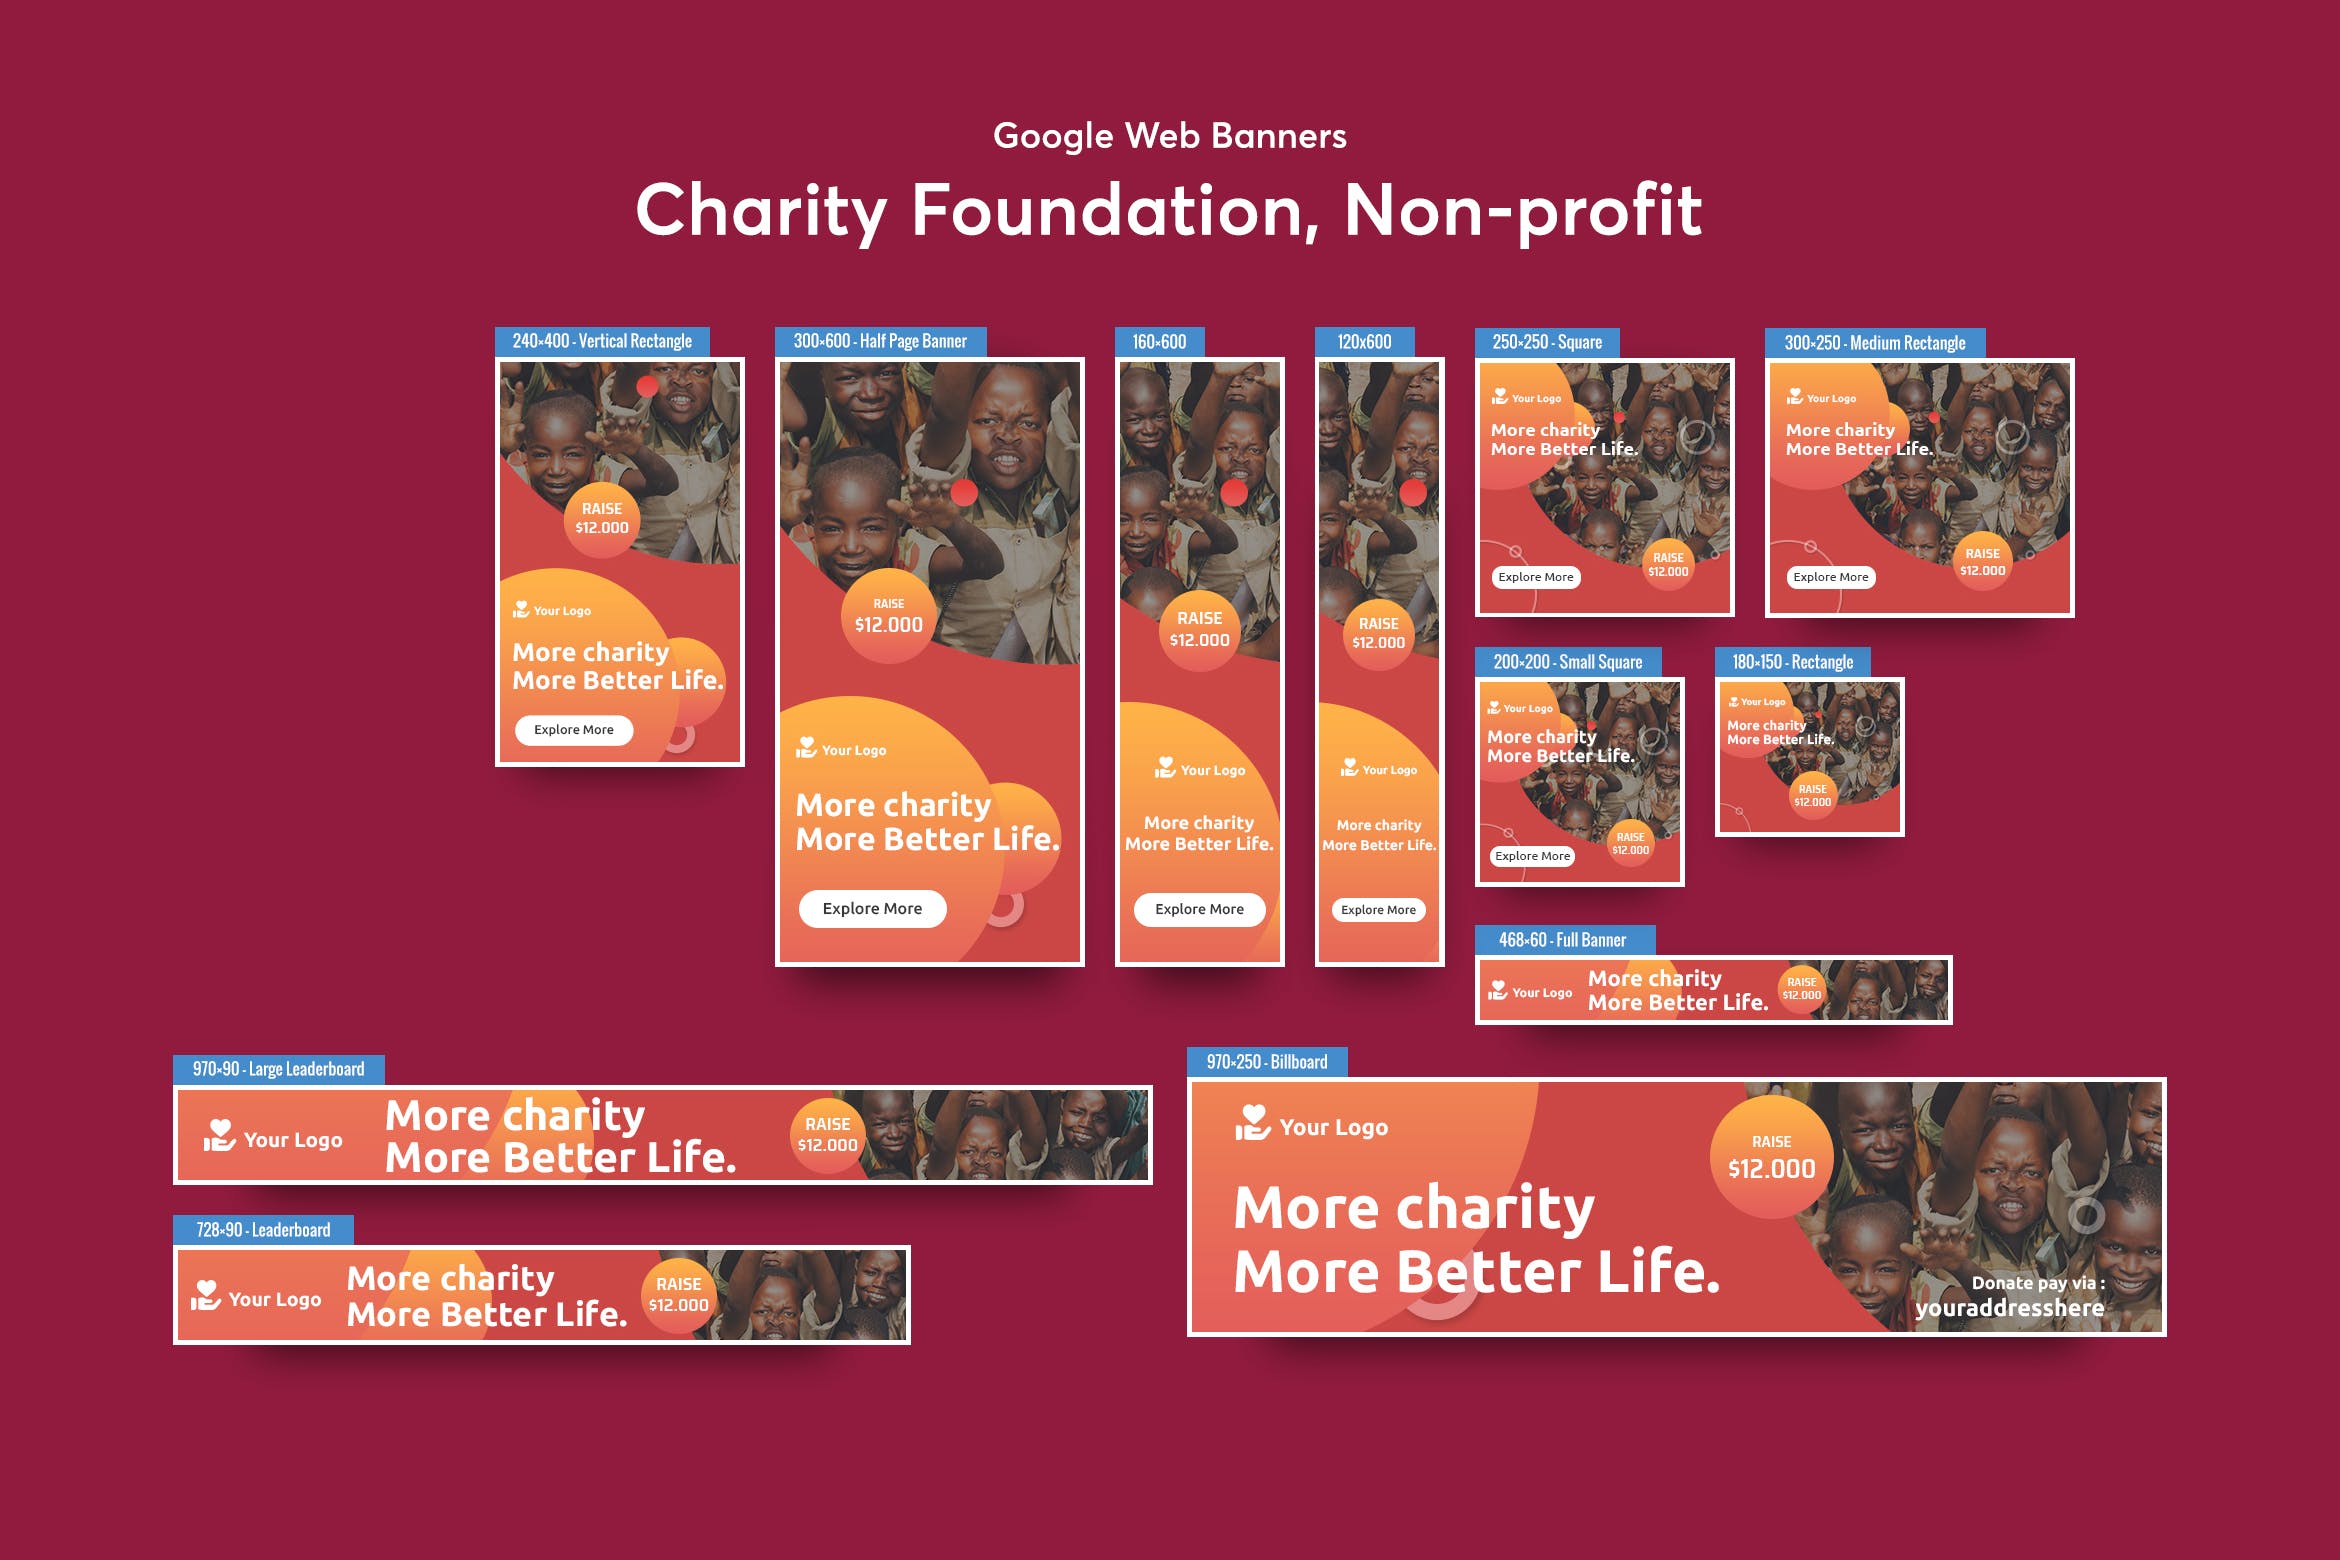 慈善基金会/非营利类型Banner横幅蚂蚁素材精选广告模板v2 Charity Foundation, Non-profit Banners Ad插图